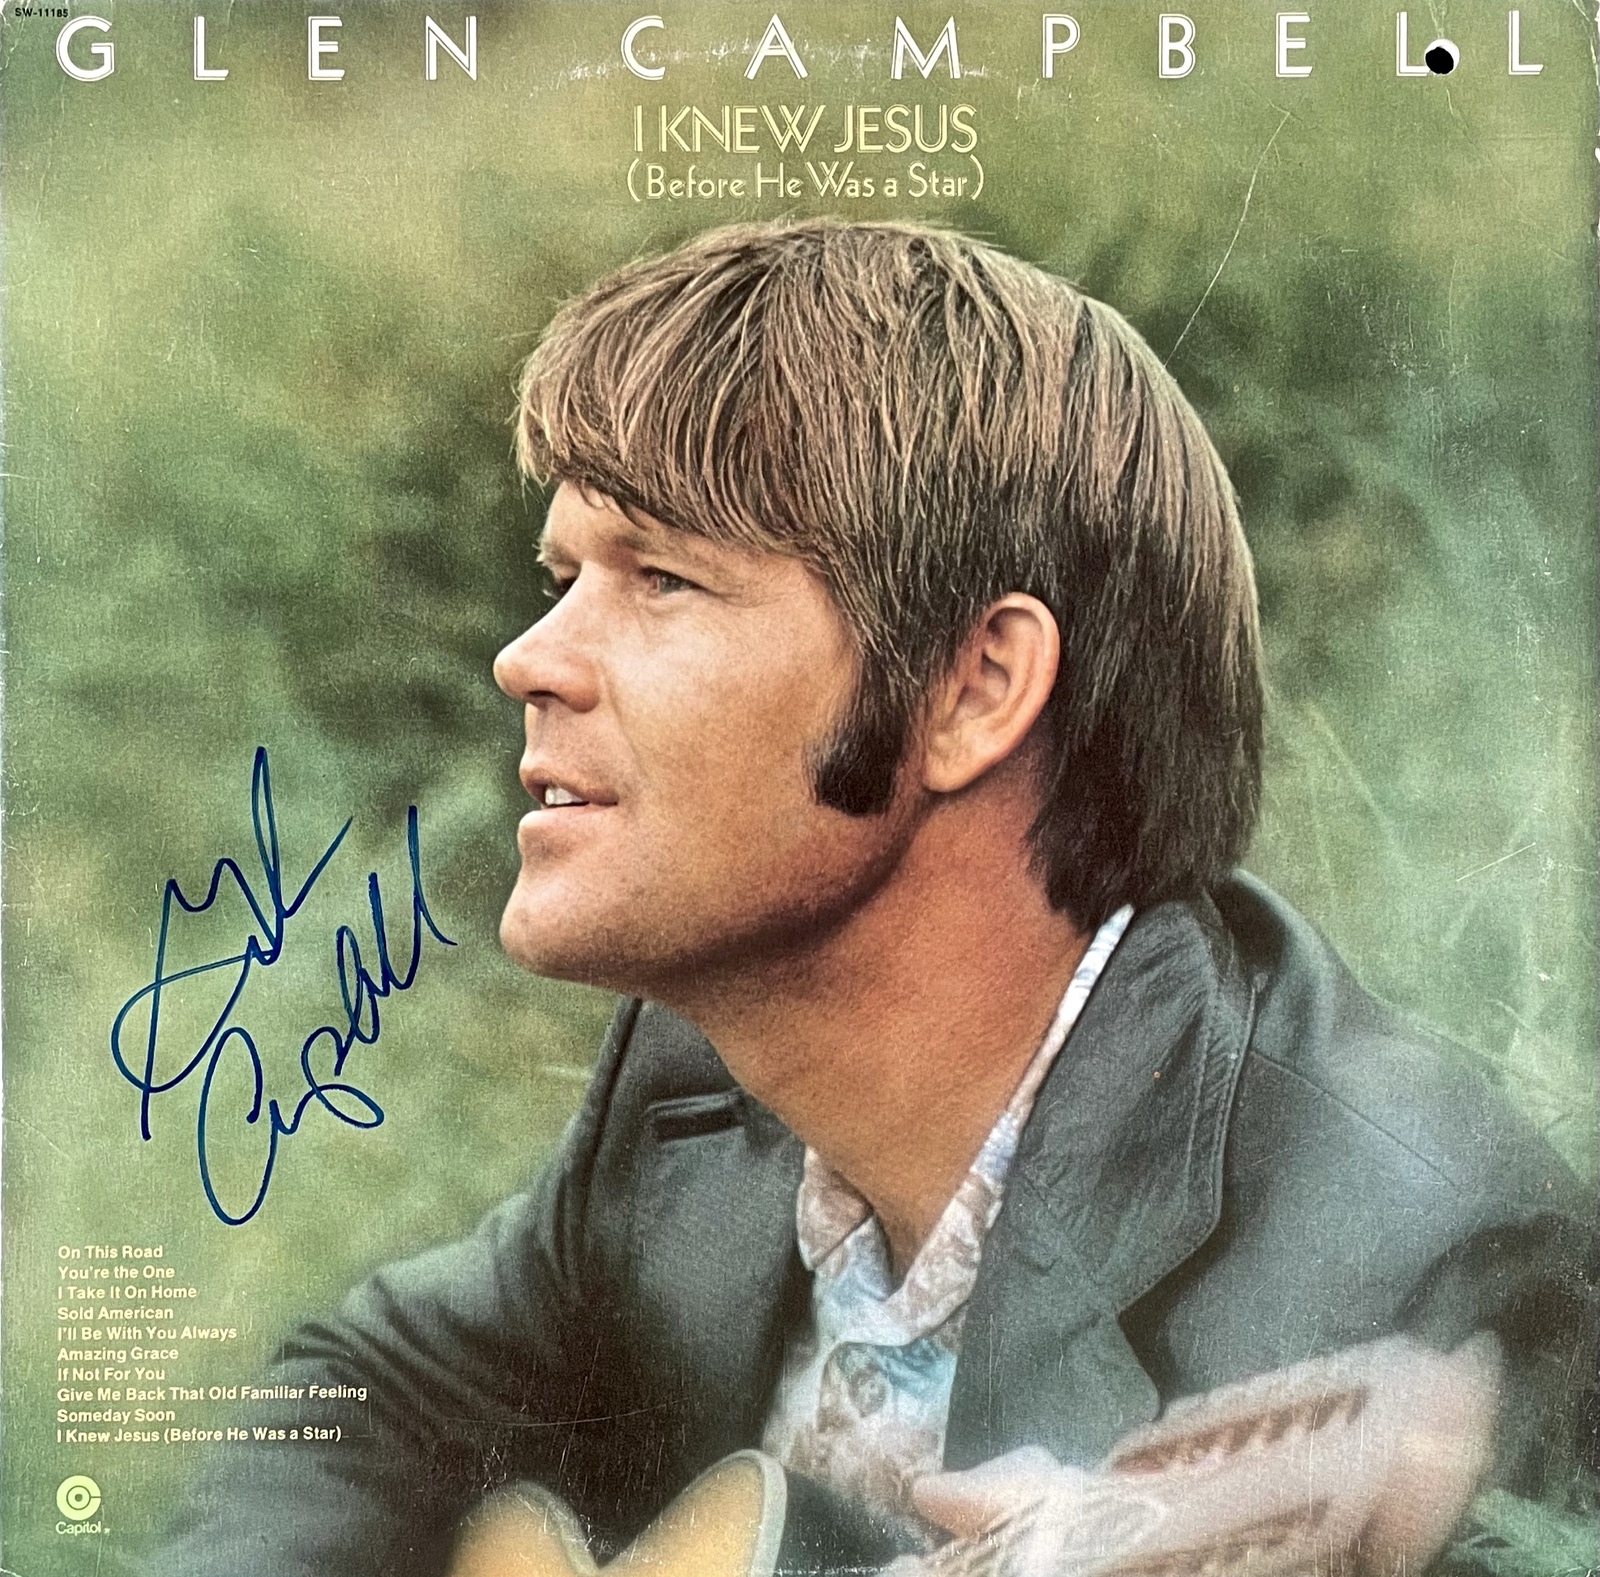 GLEN CAMPBELL Autograph SIGNED I KNEW JESUS Vinyl Record ALBUM COVER 1973 JSA - $225.00